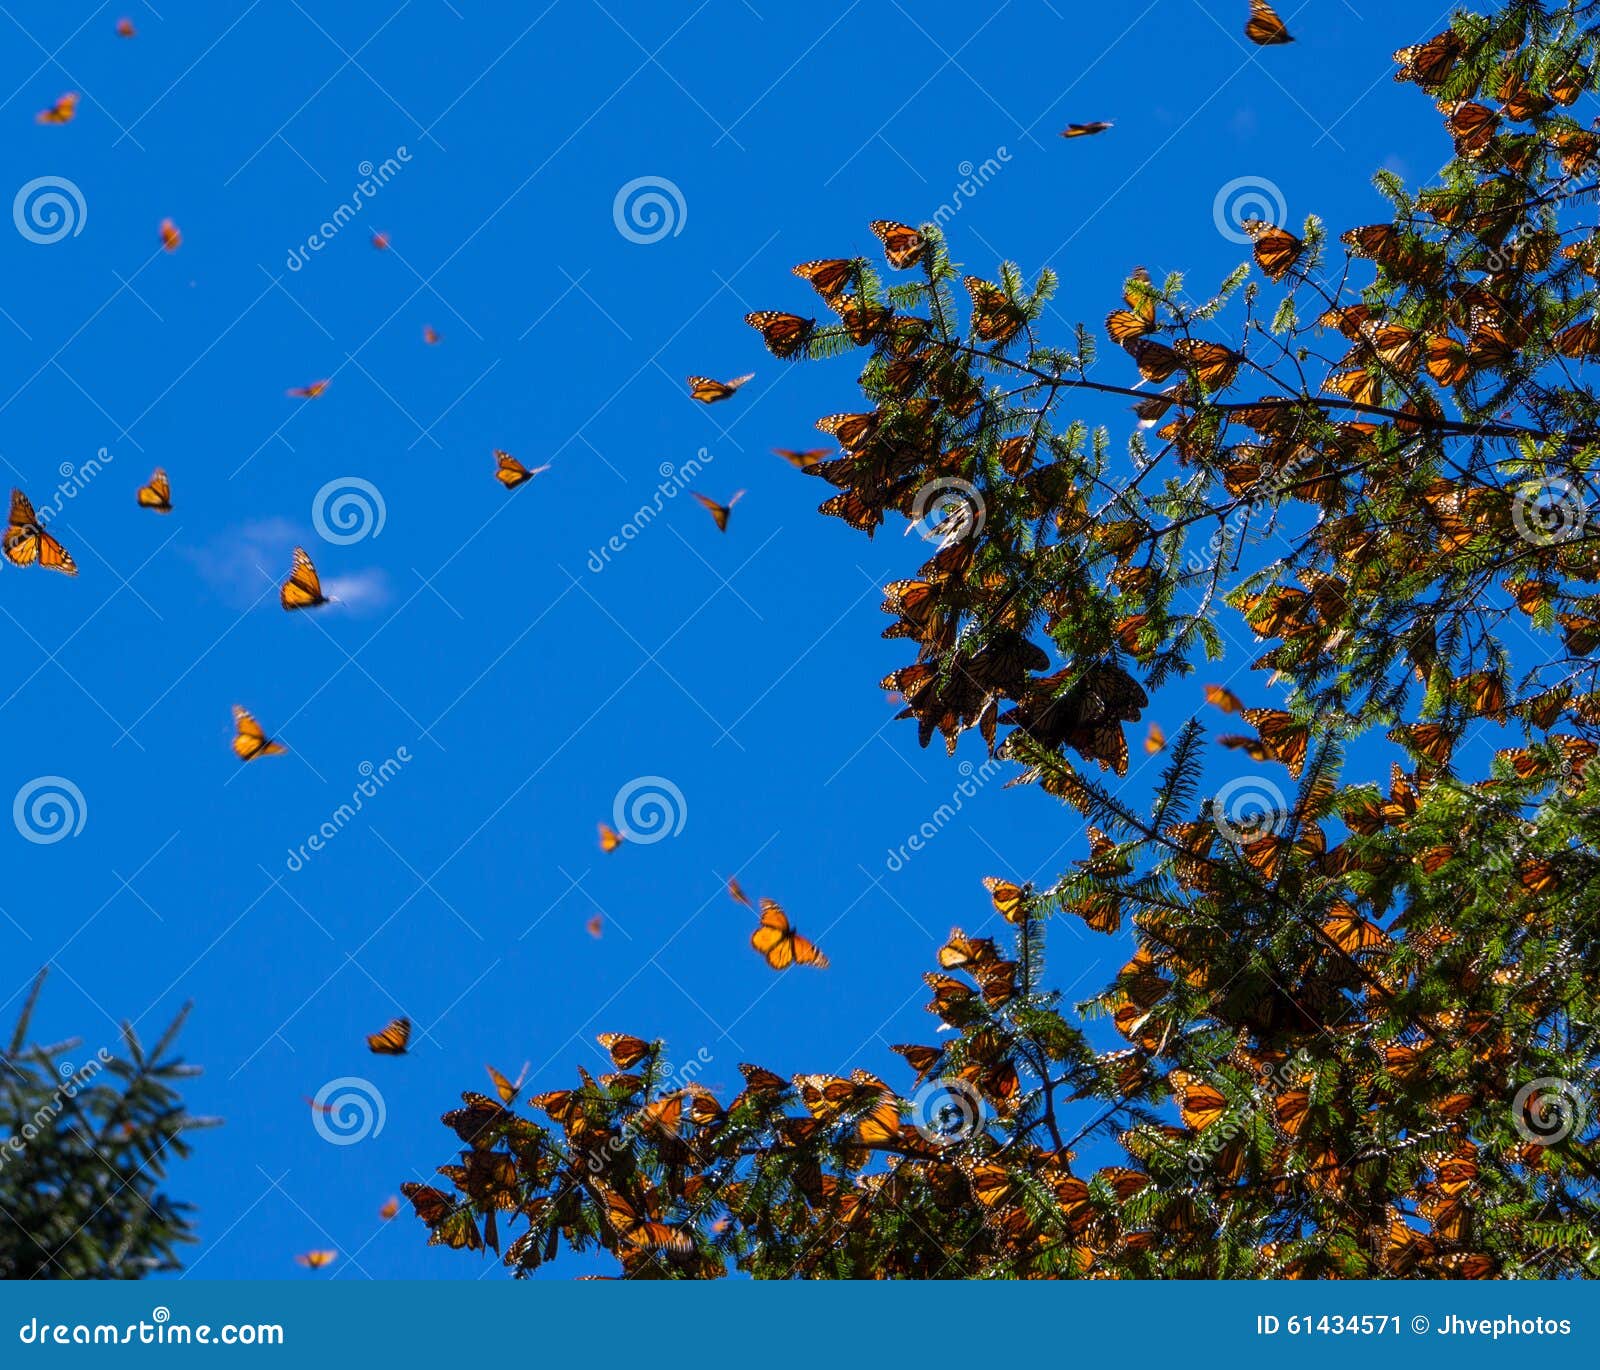 Monarch Butterflies On Tree Branch In Blue Sky Background Stock Image